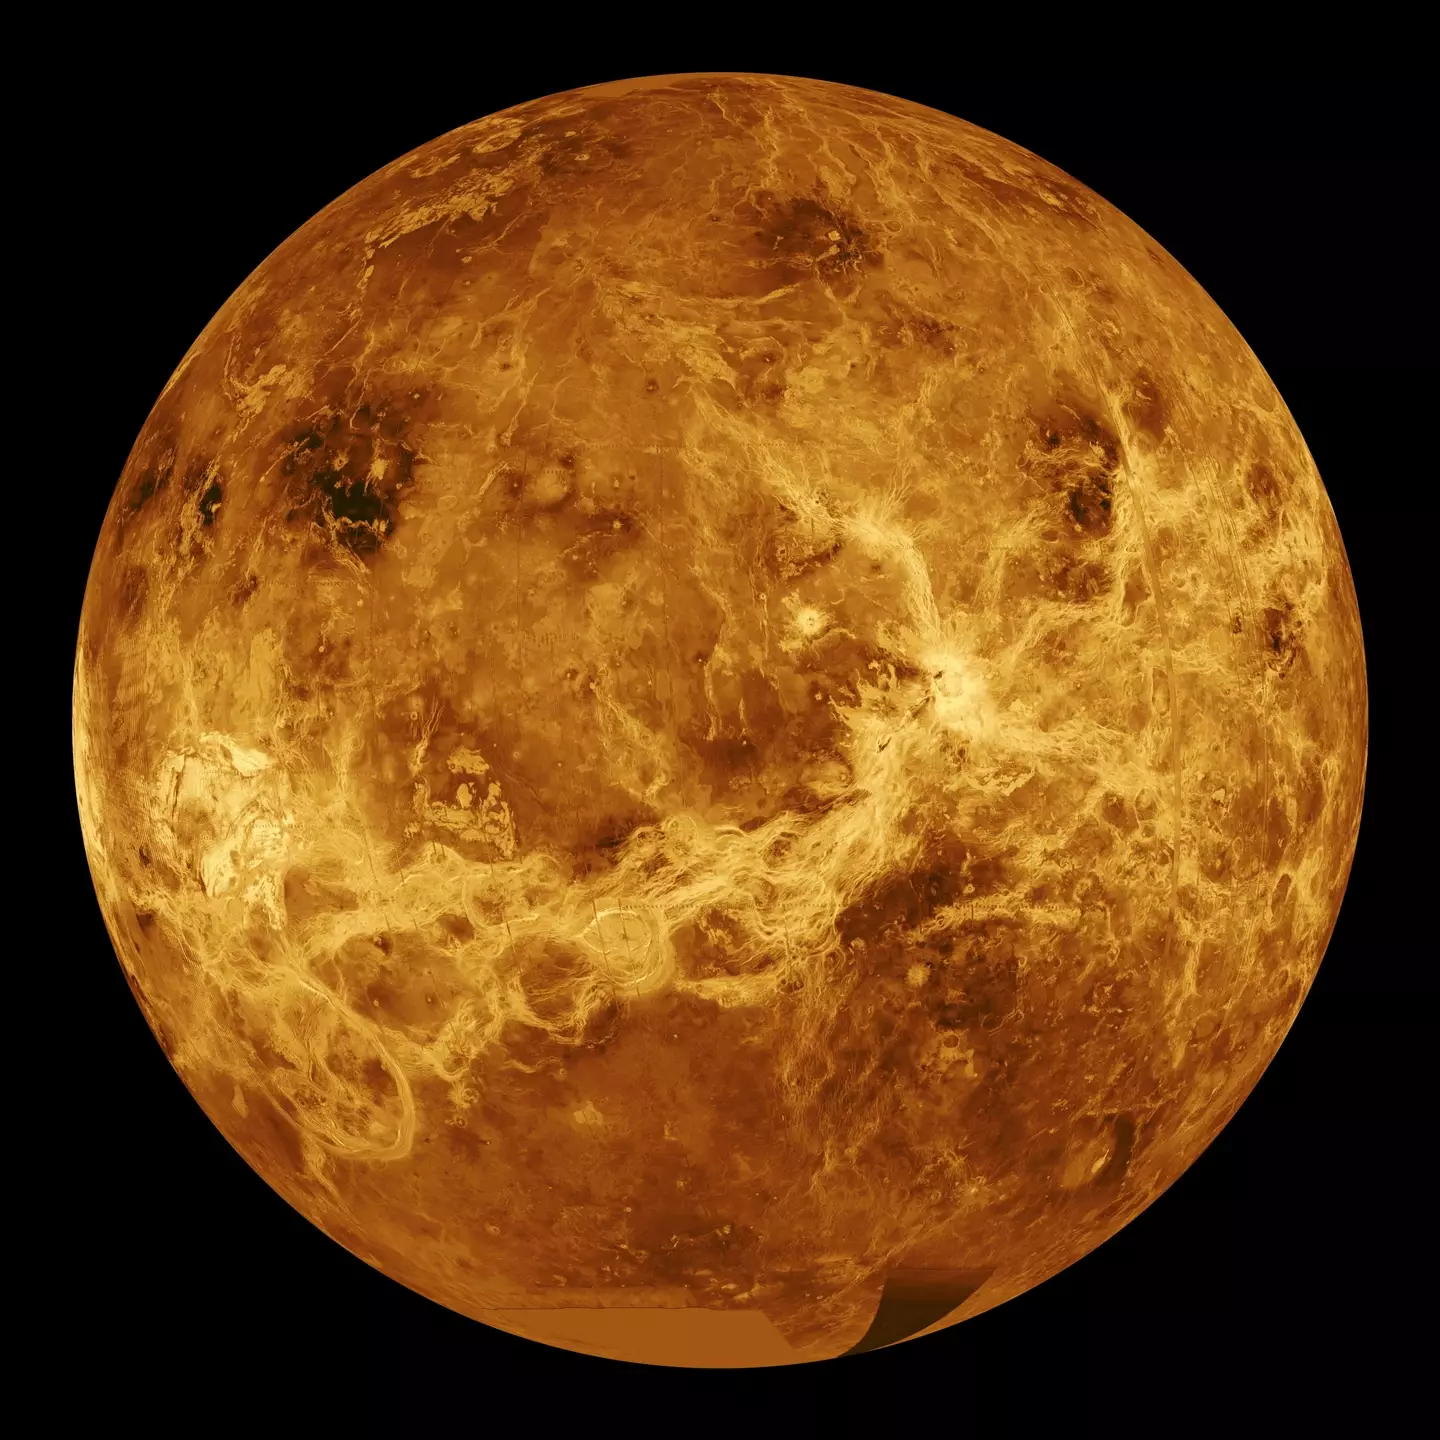 NASA is set to further explore Venus in its VERITAS mission.